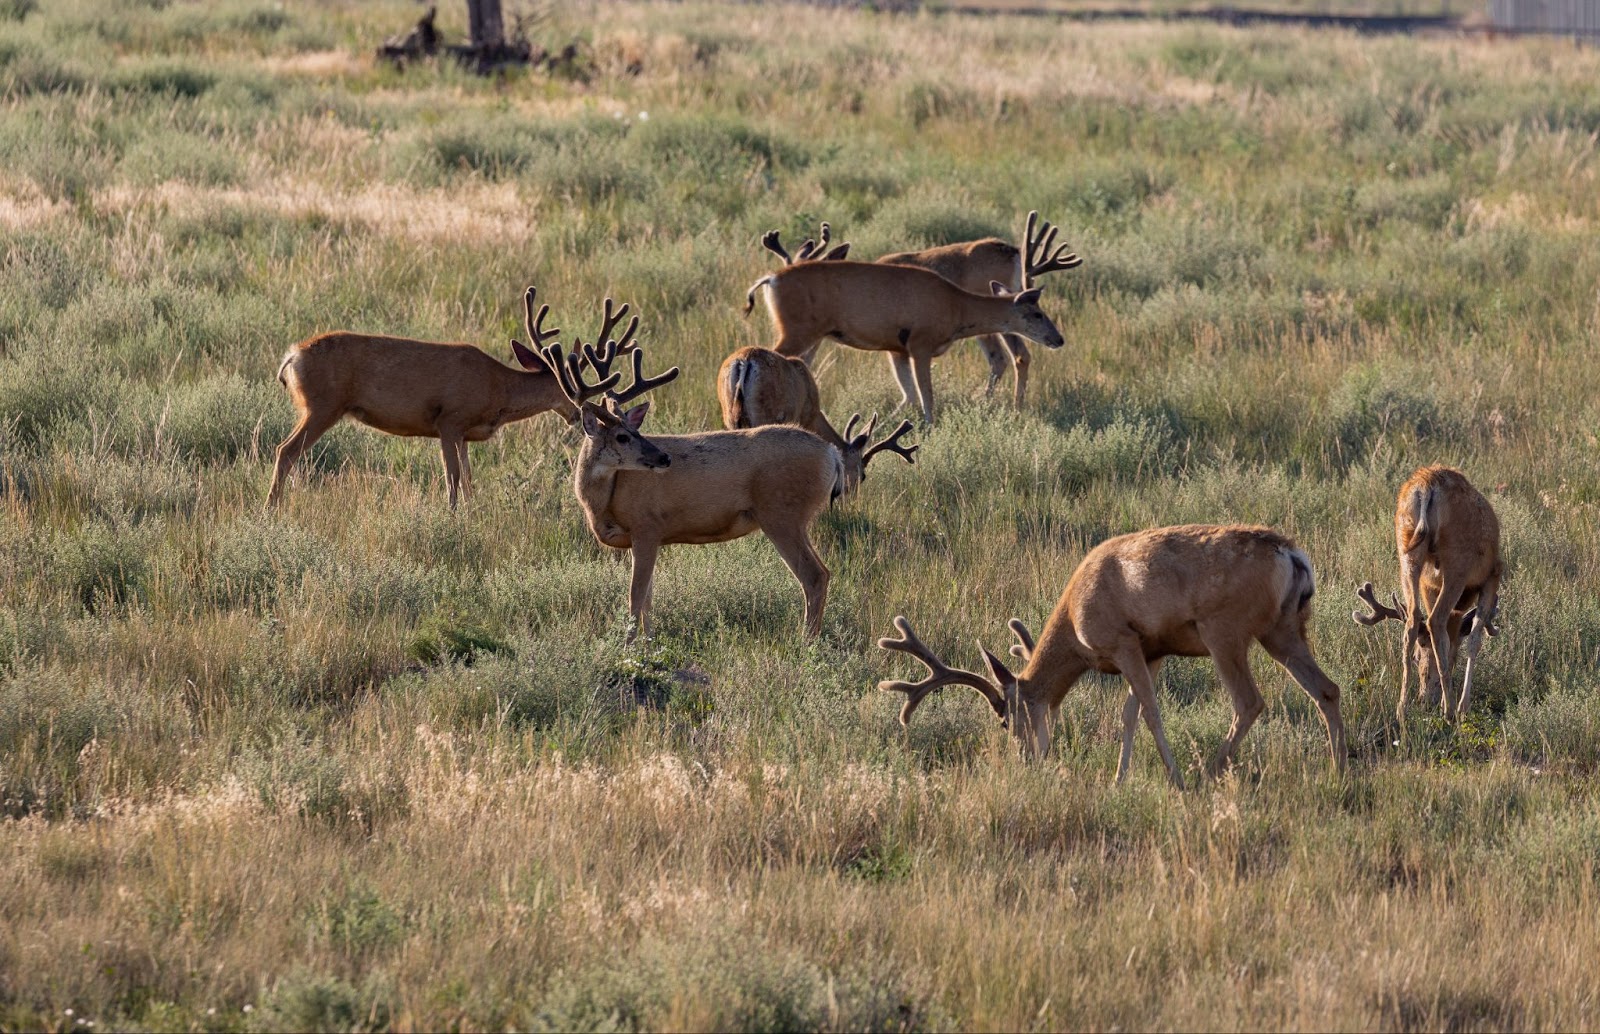 A herd of deer peacefully grazing in a field